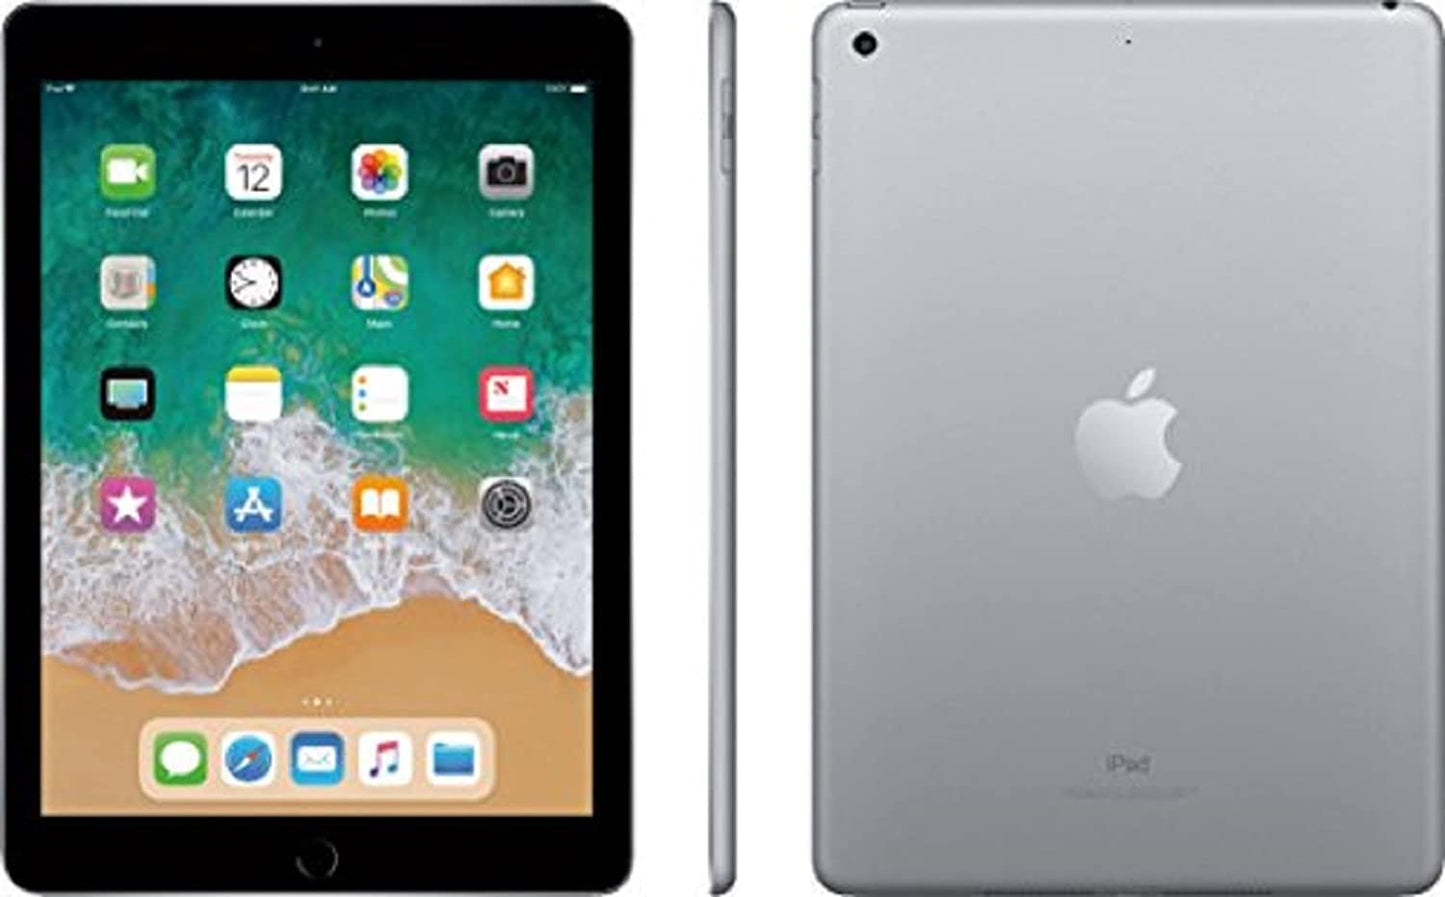 Apple iPad 5th Gen - 128GB - UNLOCKED